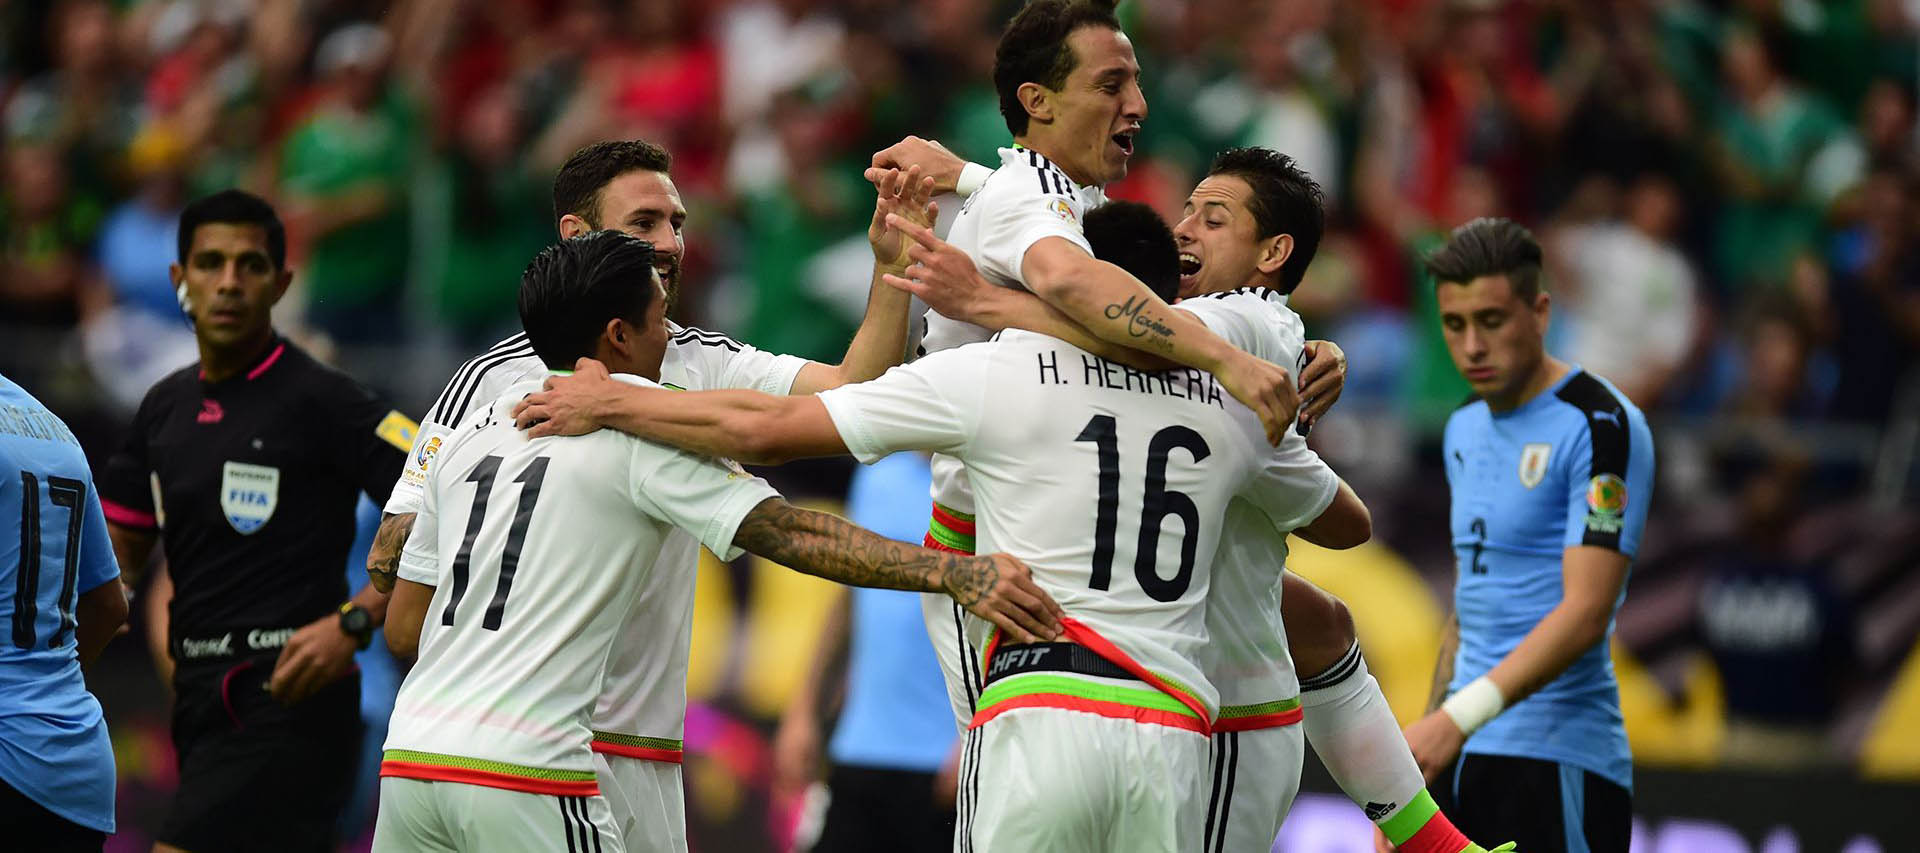 Soccer International Friendlies to Must Bet: Uruguay vs Mexico Most Interesting Match